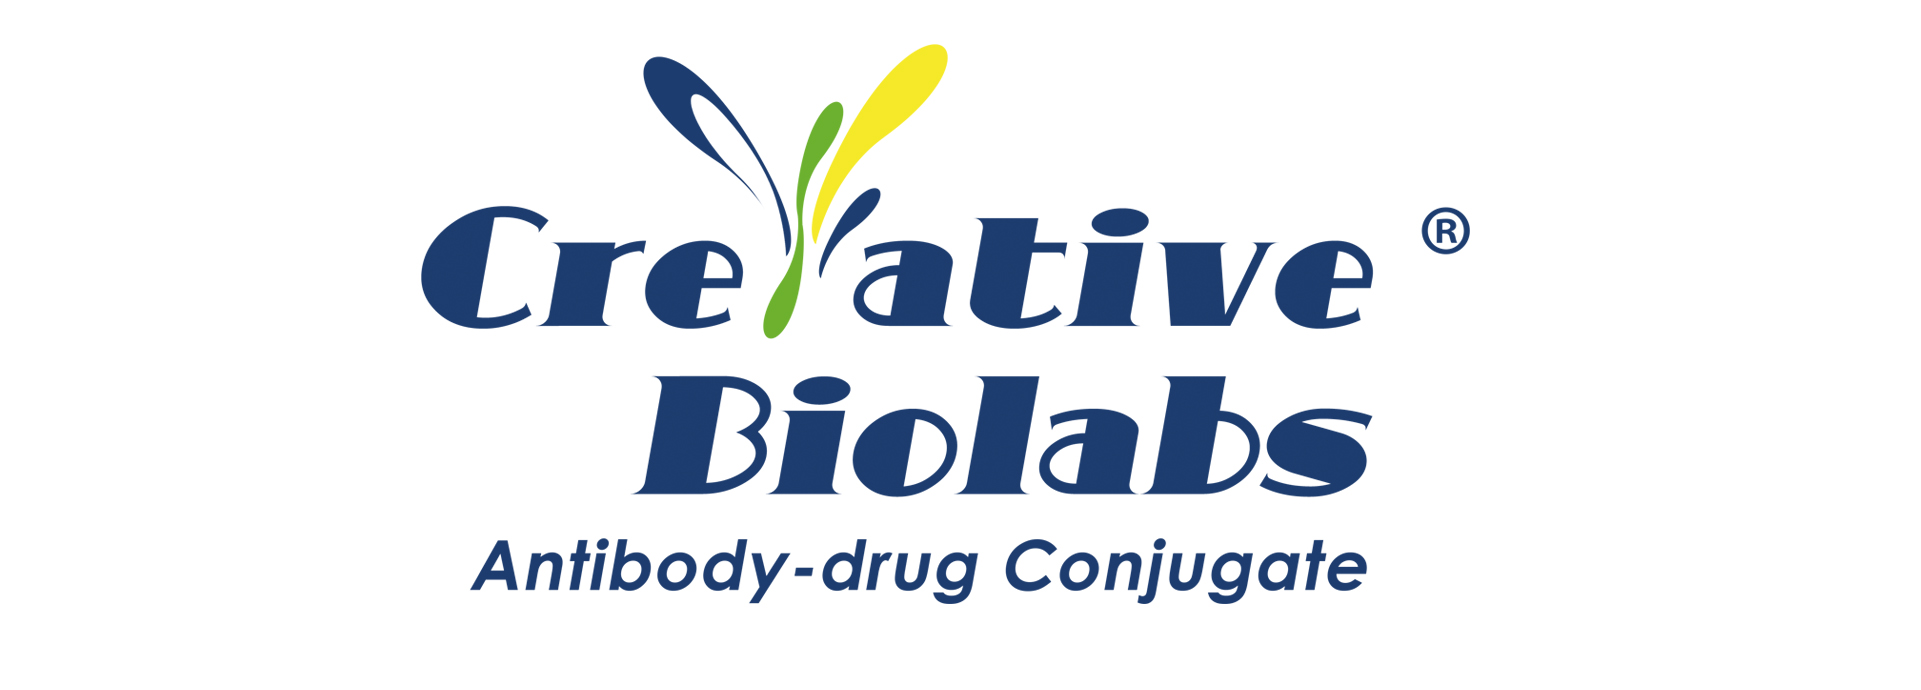 Creative Biolabs ADC Blog